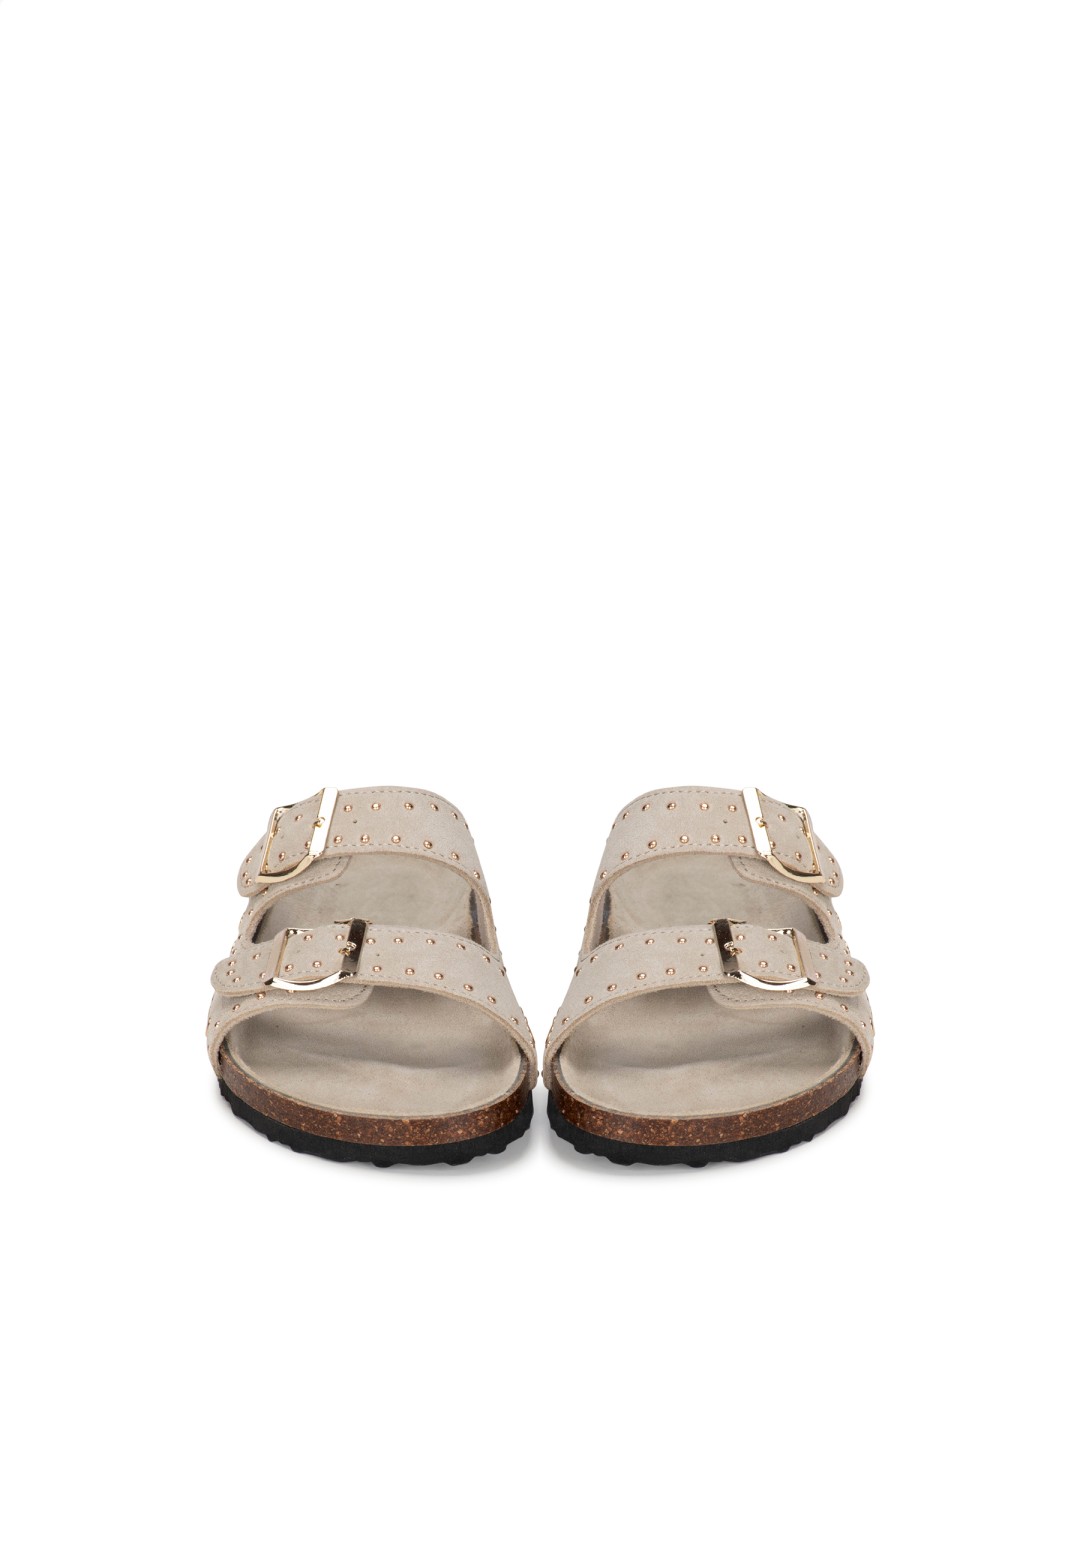 PS Poelman SARAN Women Sandals | The official POELMAN Webshop